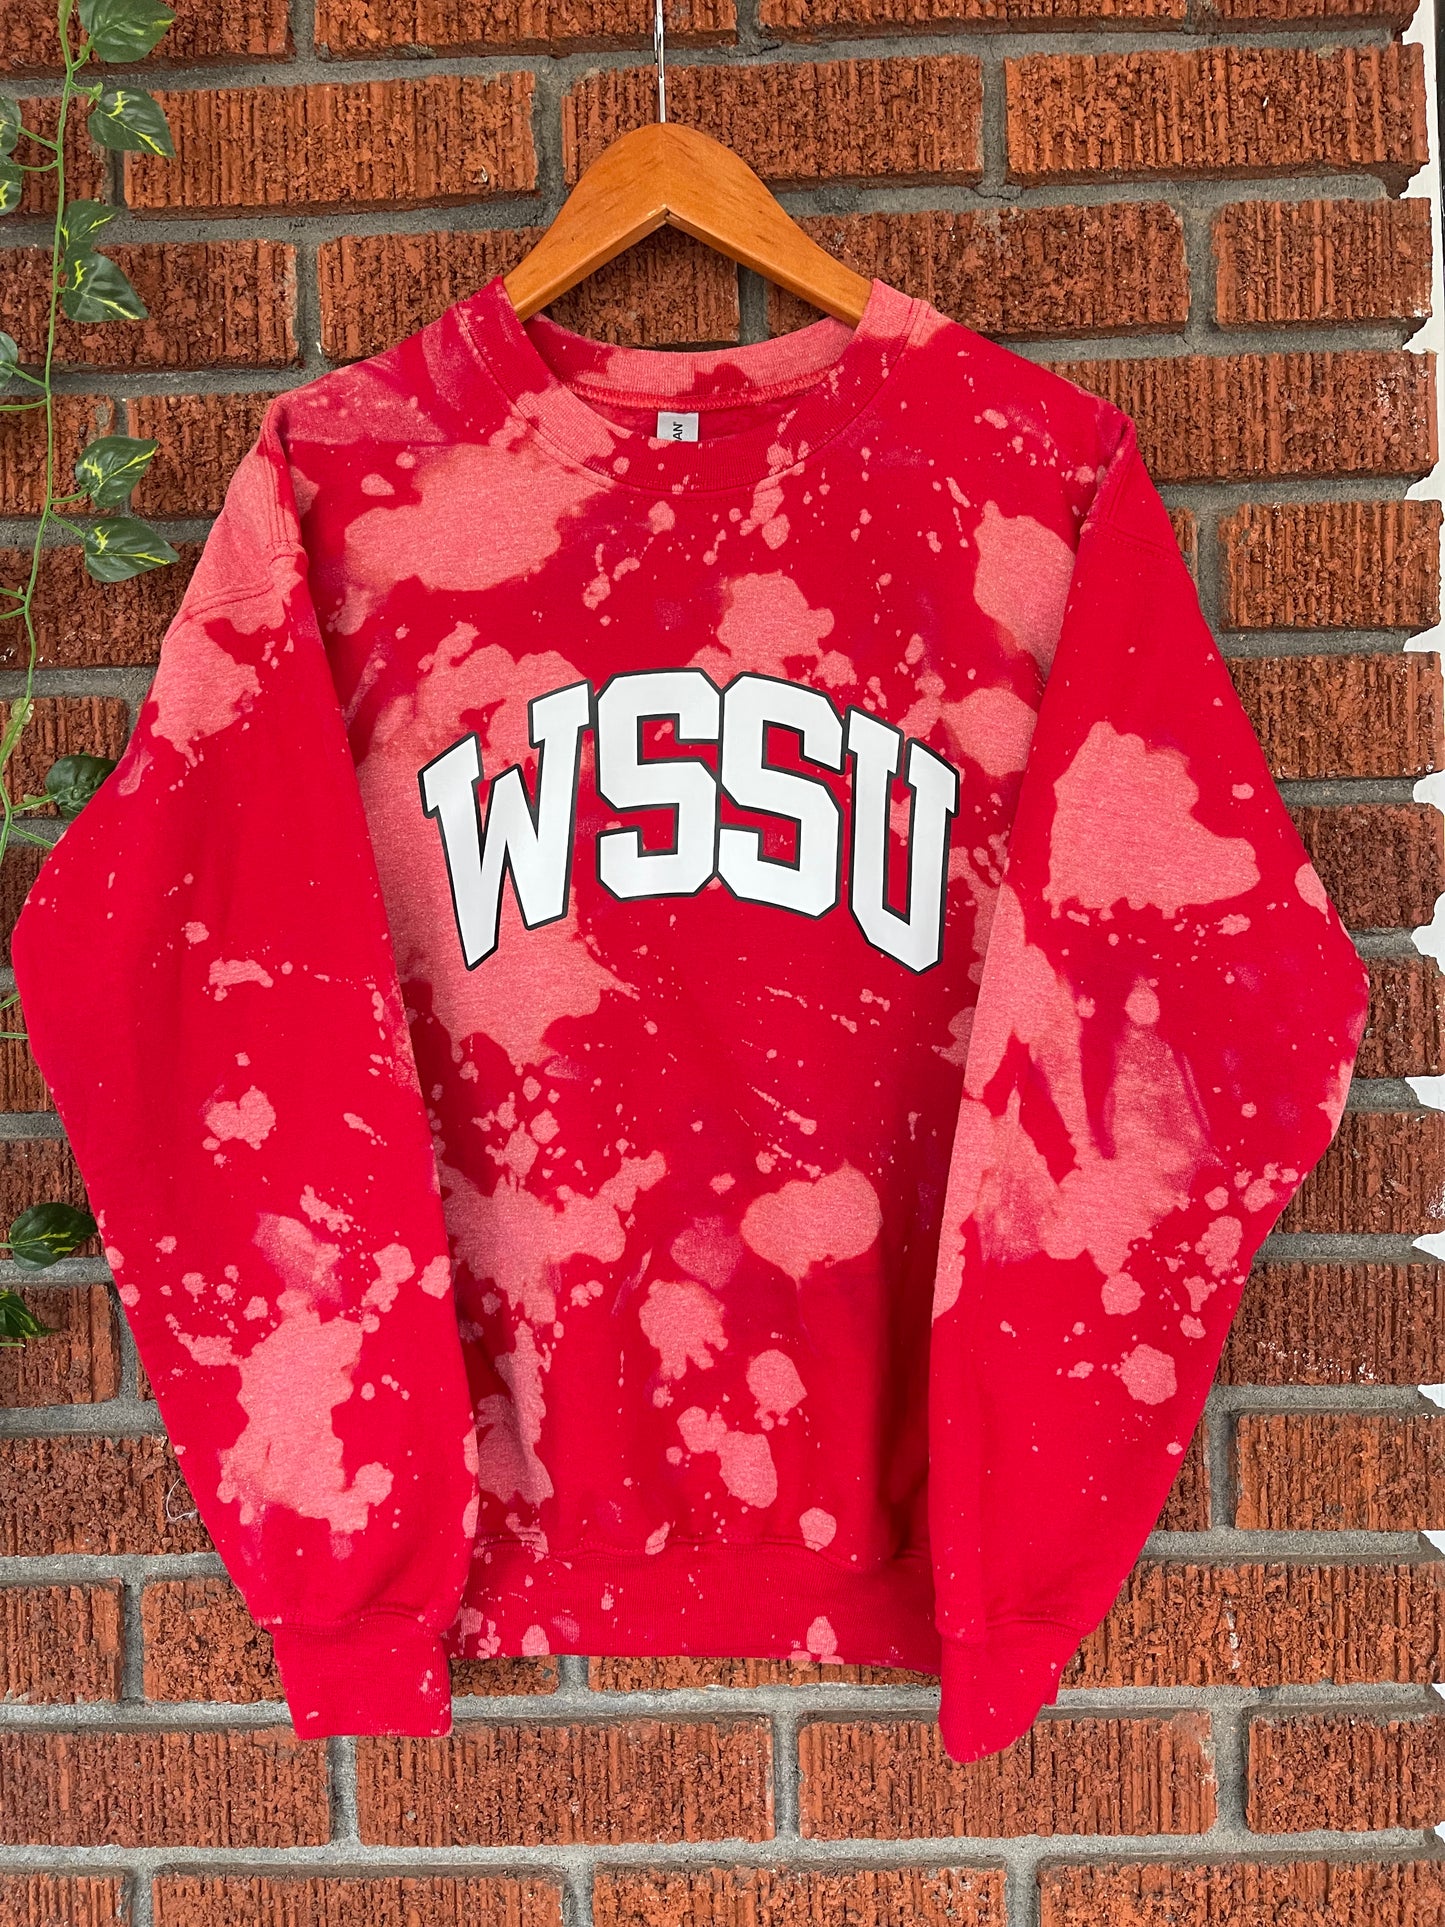 Handmade WSSU DST Color-Way Hand Bleached Crewneck Sweatshirt